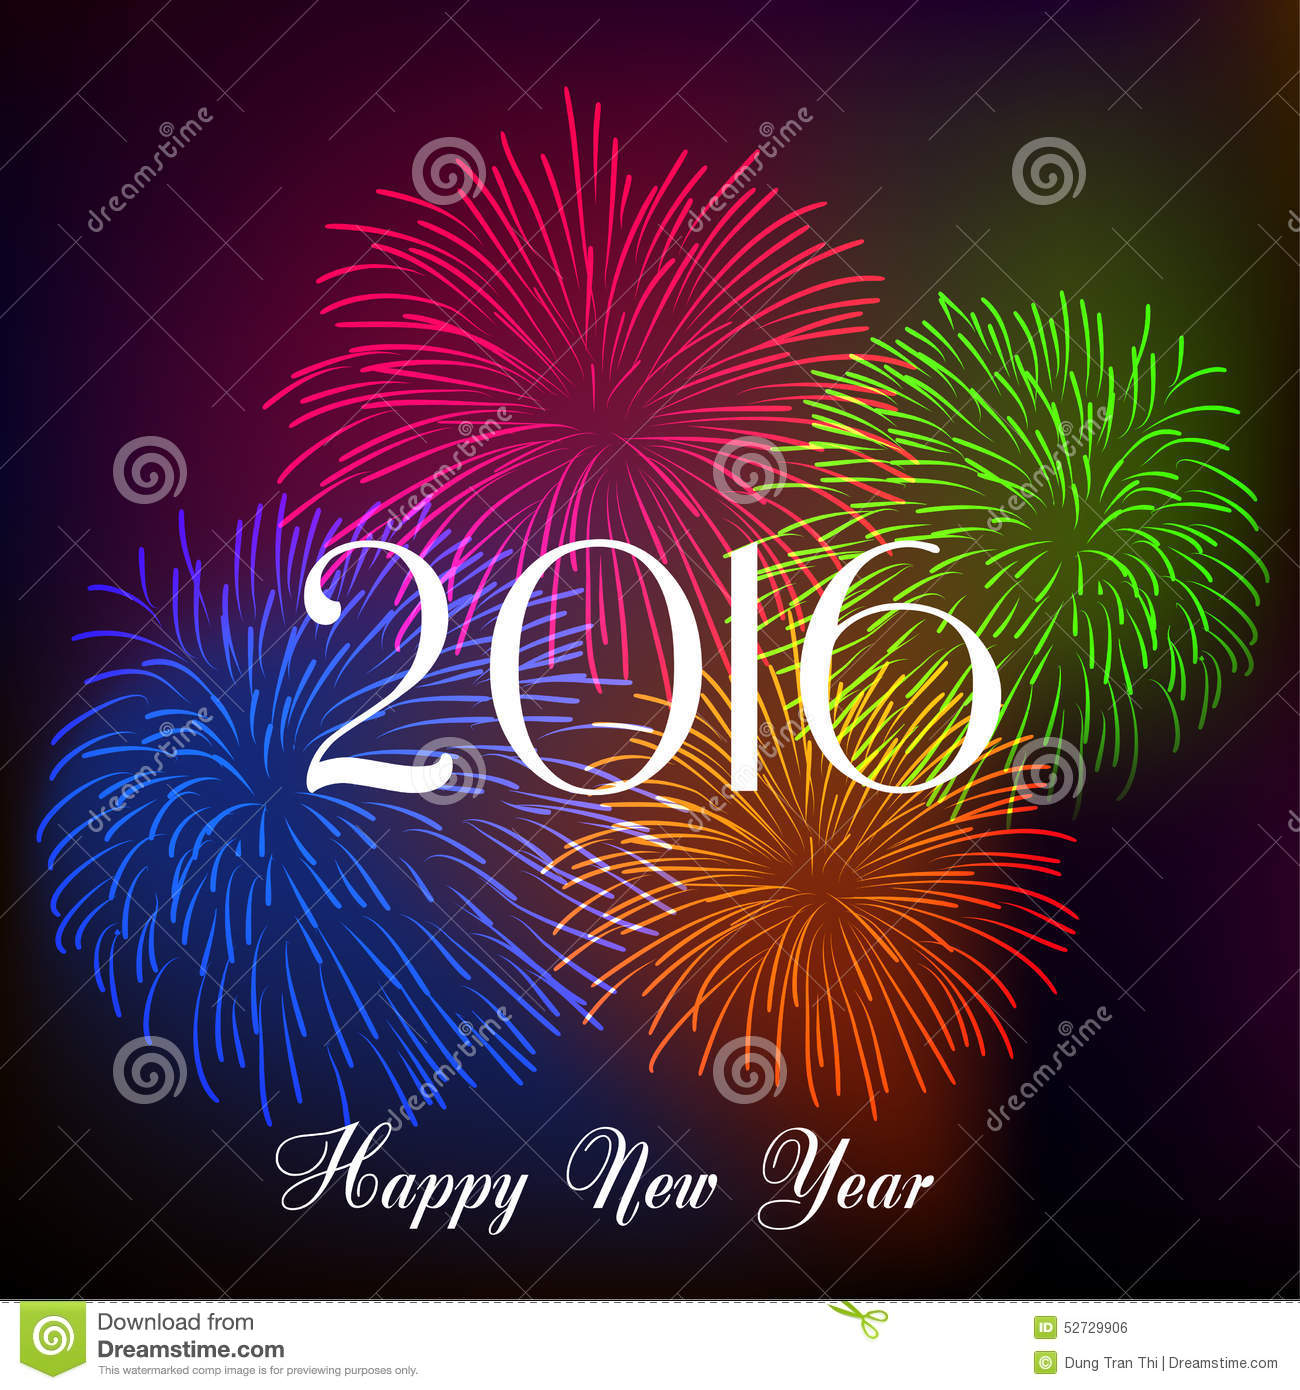 Happy New Year Photo 2016 Full HD Wallpaper 17344 Wallpaper computer